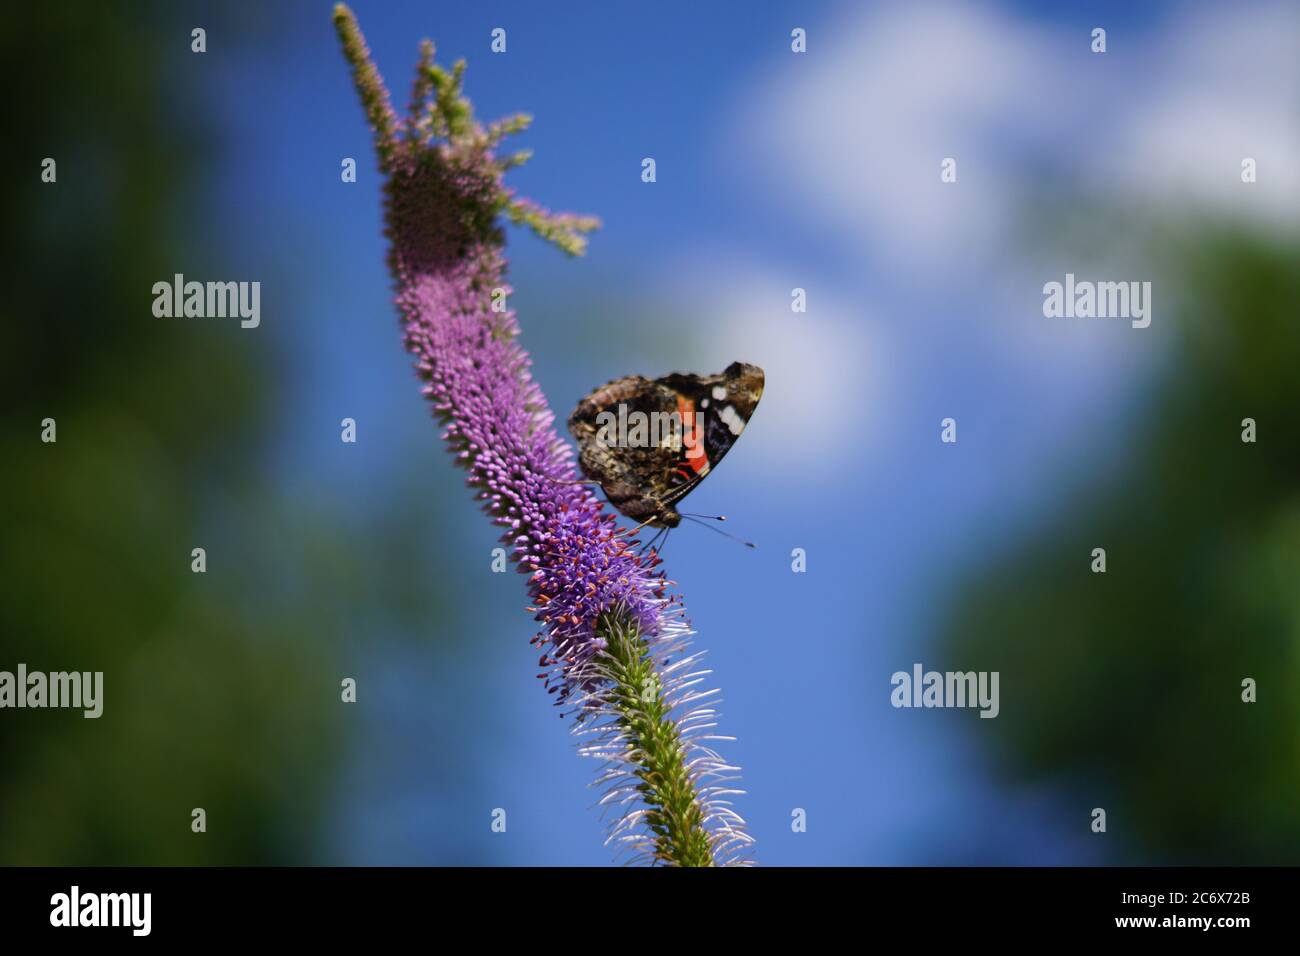 Veronicastrum virginicum, butterfly sitting on purple flower in the garden Stock Photo